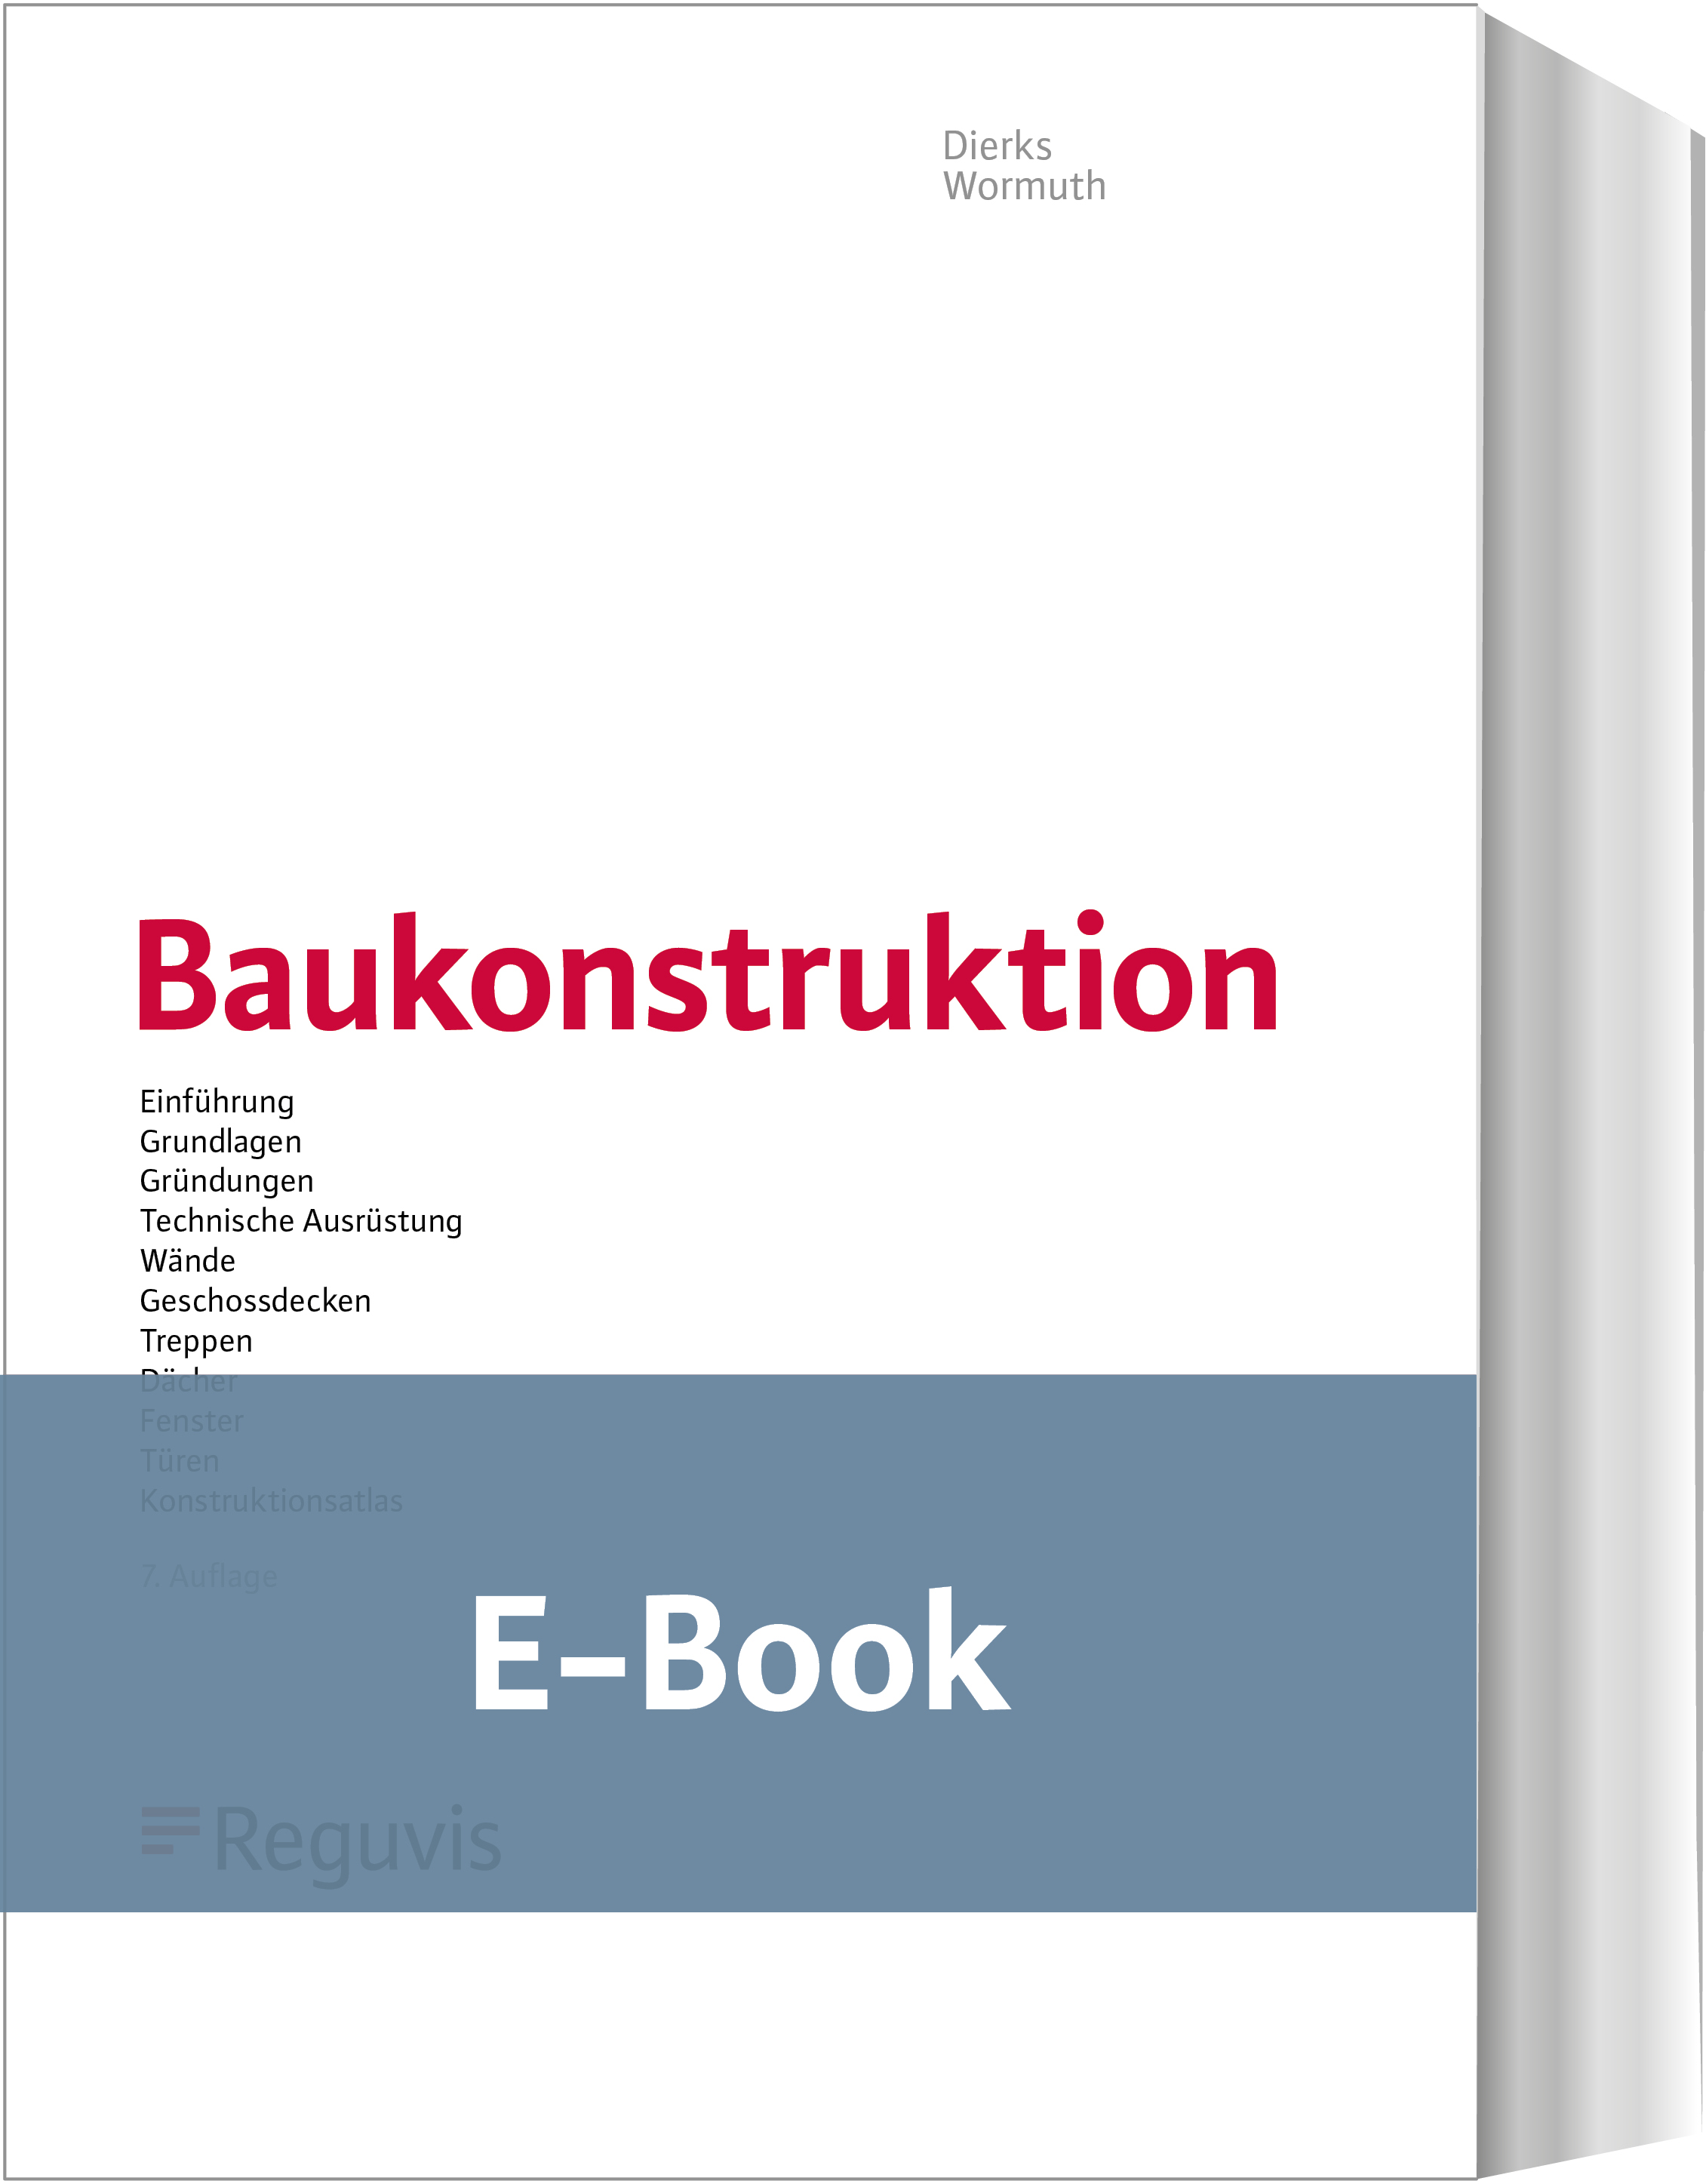 Baukonstruktion (E-Book)